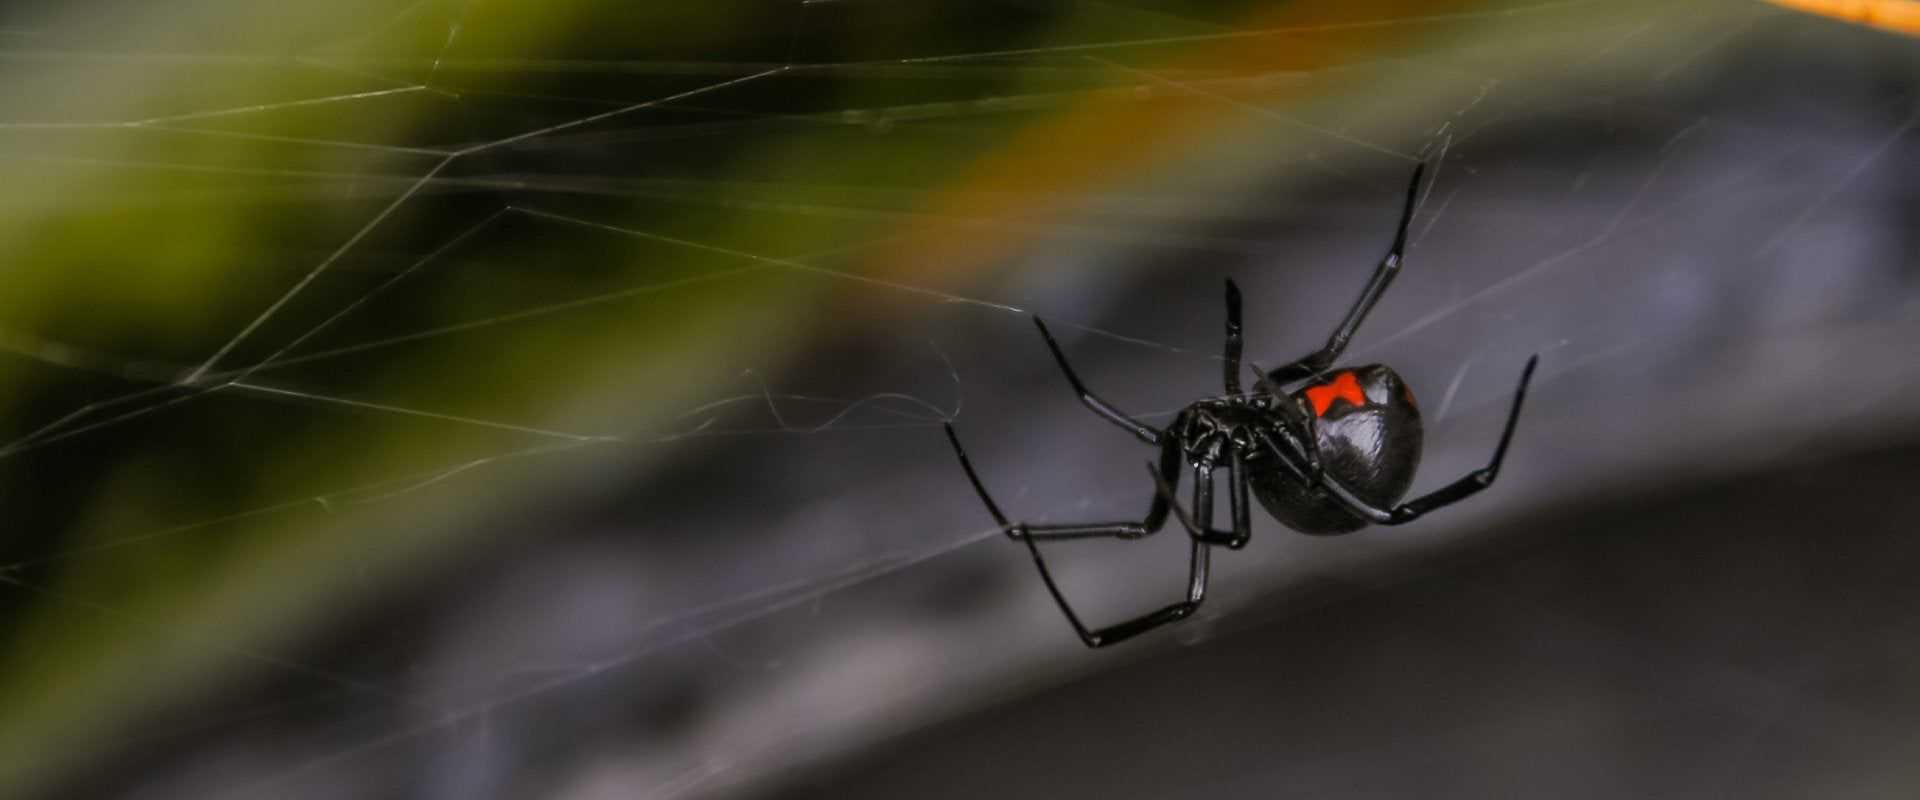 black widow in web in south florida